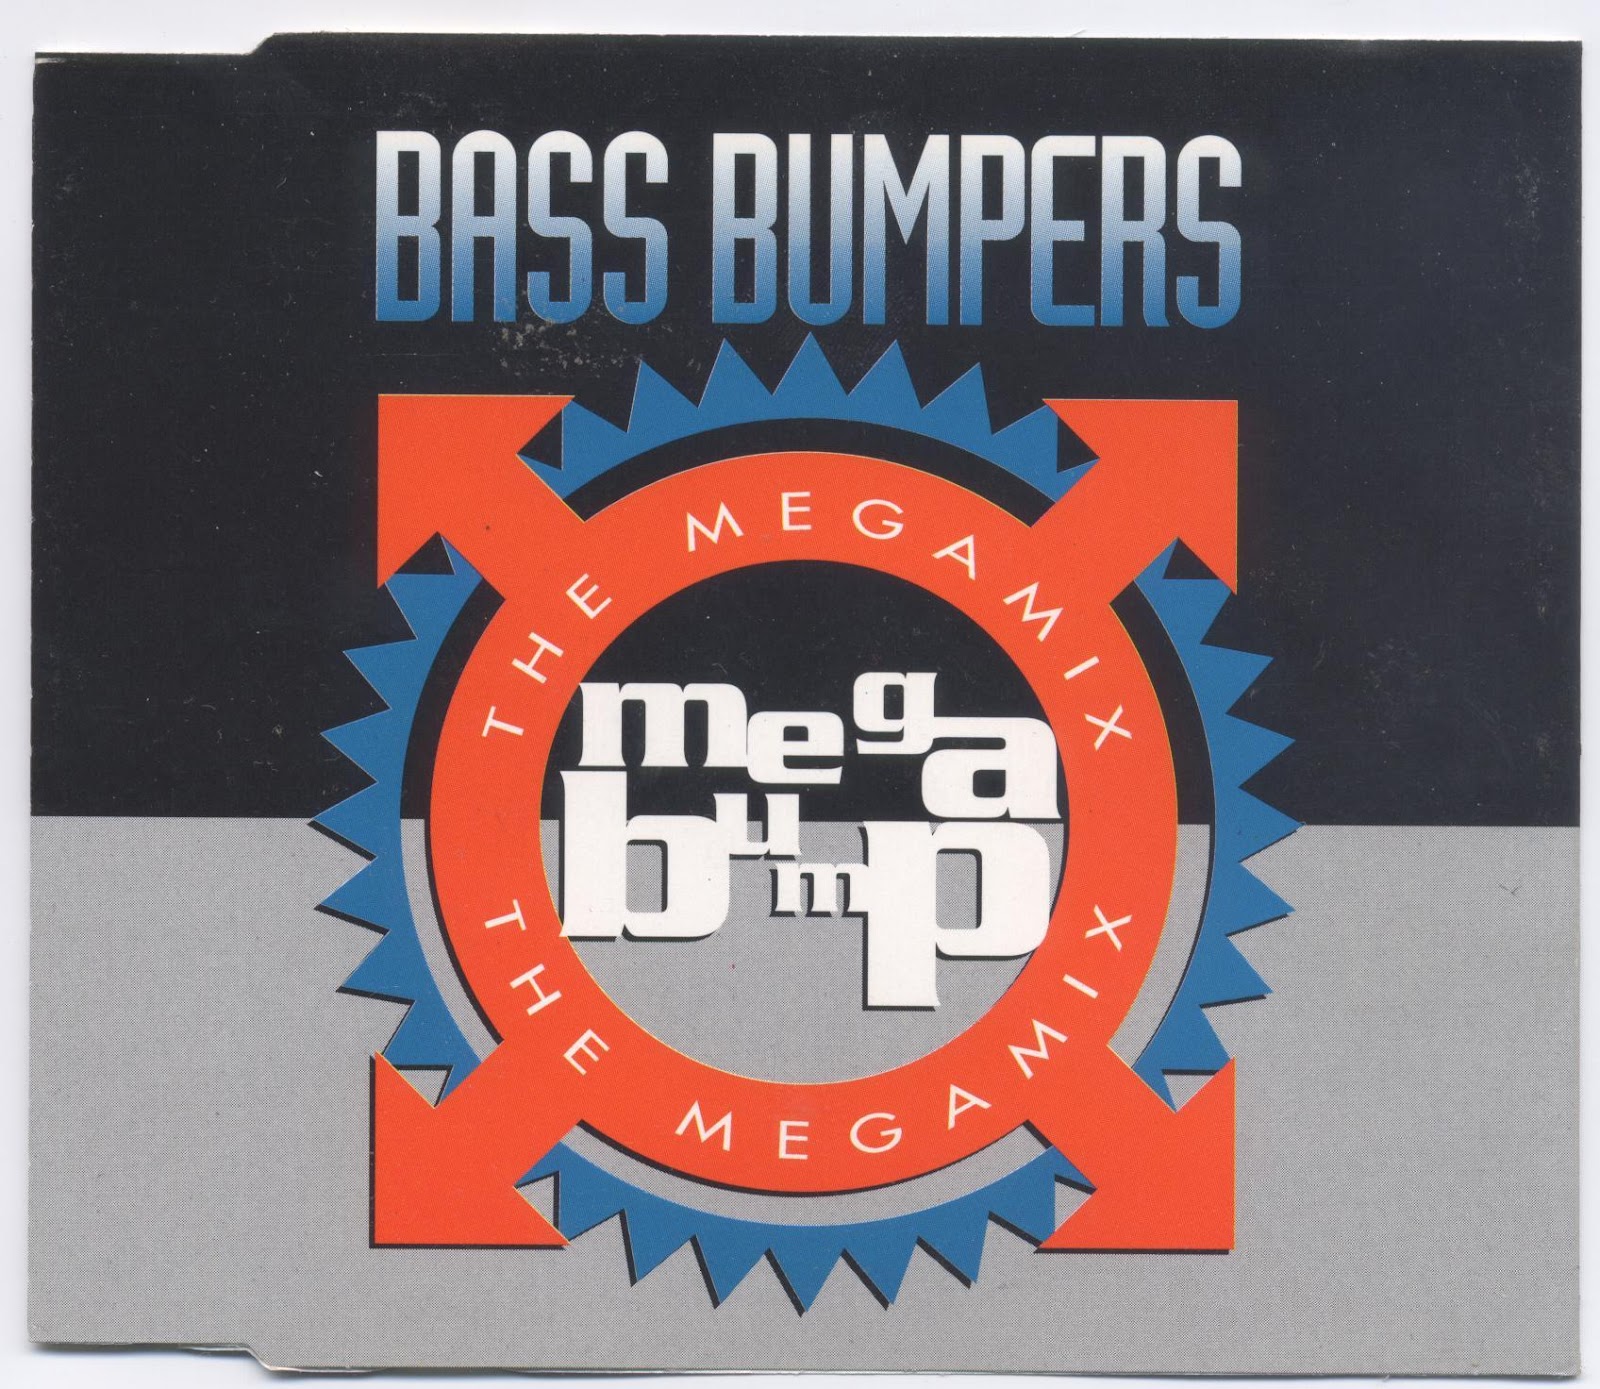 Bass bumpers. Bass Bumpers – Advance. Bass Bumpers Mega Bump. Bass Bumpers группа постеры.